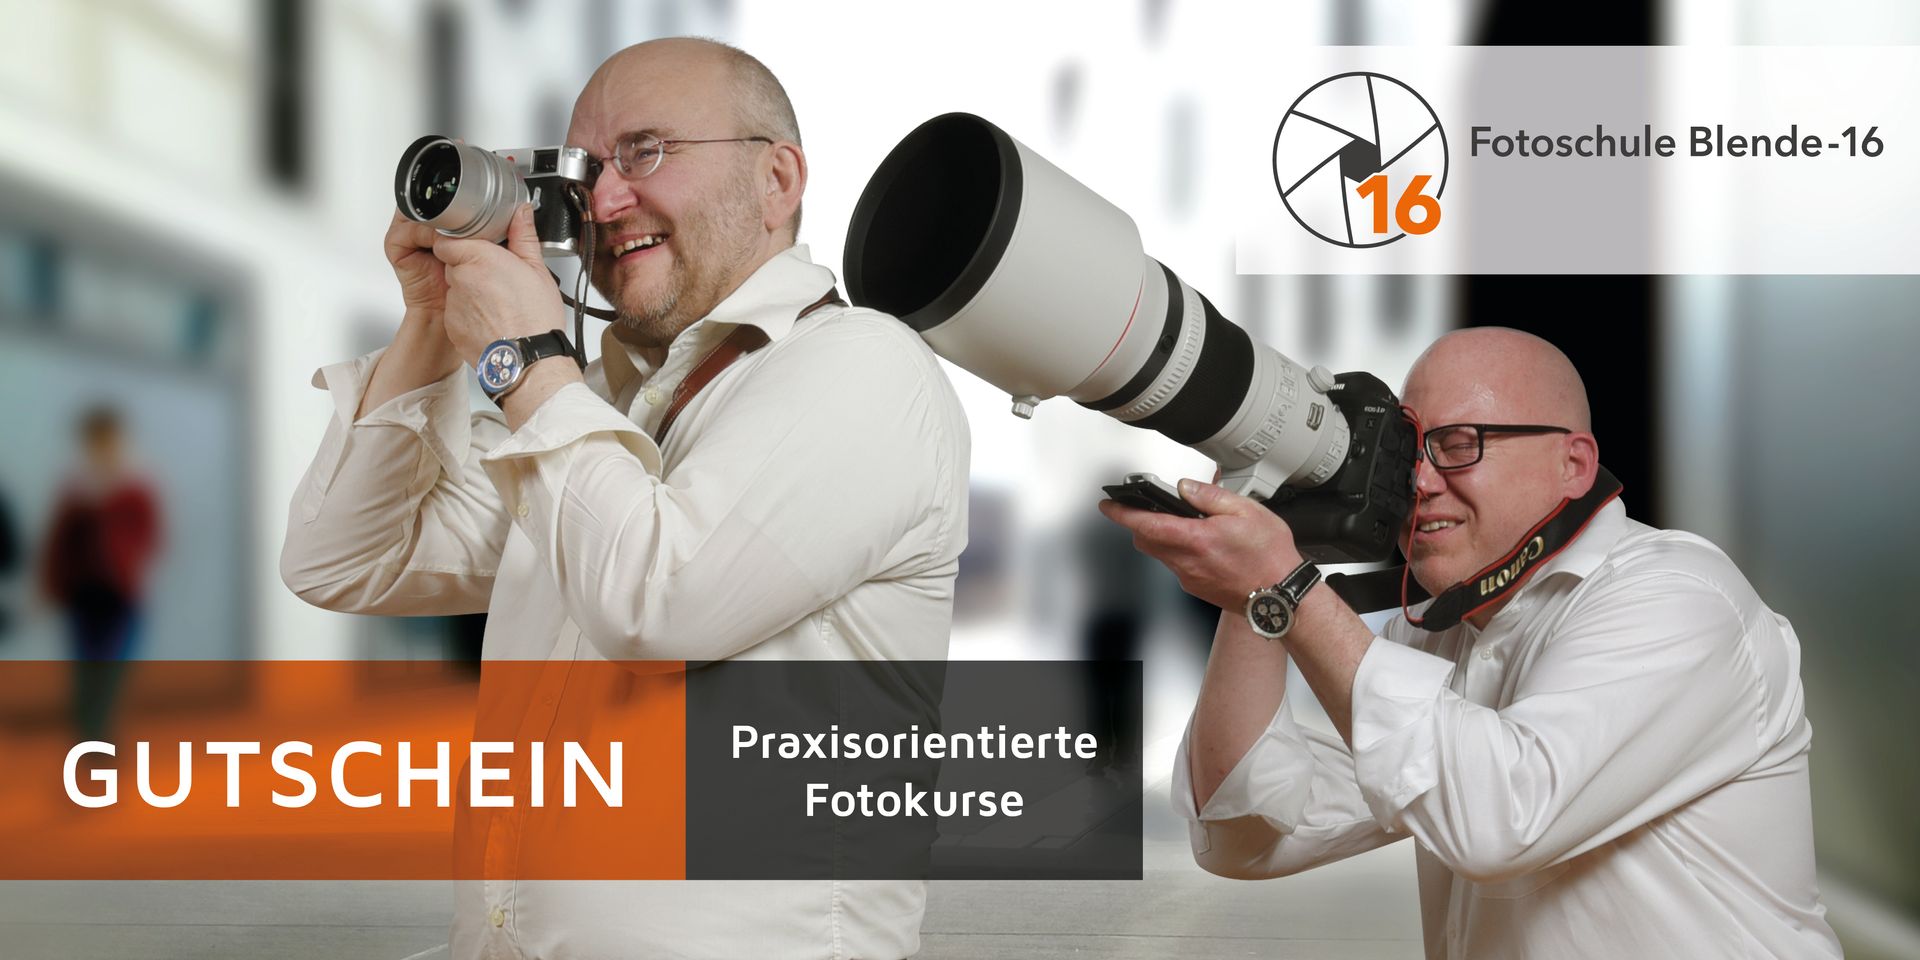 Links Herbert Mrosek, rechts Alexander Mrosek, die beiden Fototrainer der Fotoschule Blende-16 in Nürnberg, Fotokurs Systemkamera.